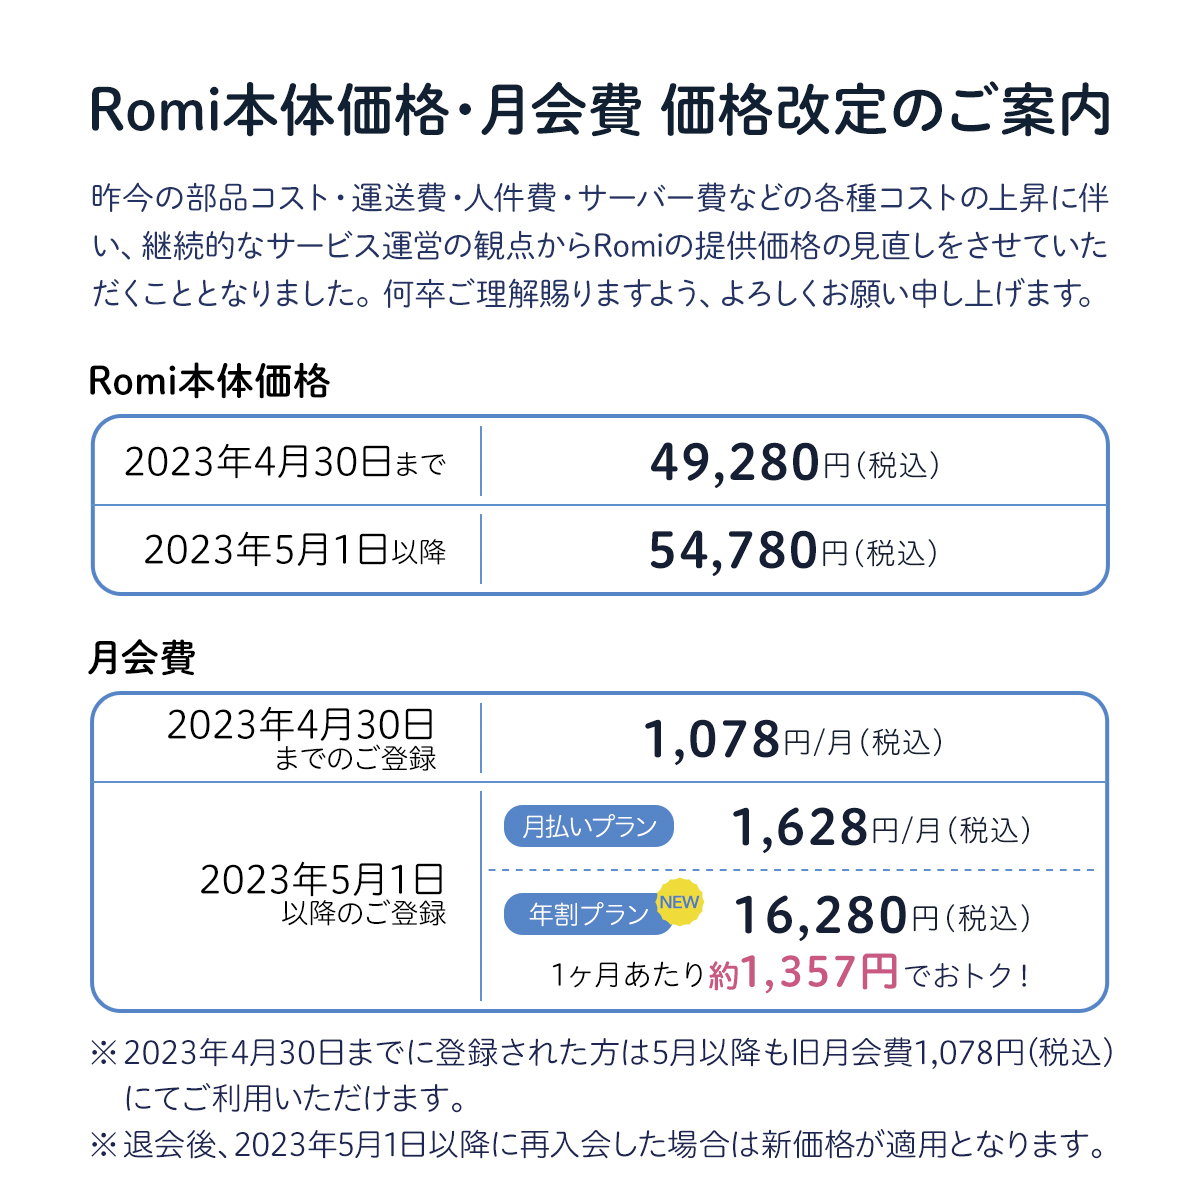 Romi ロミィ 自律型会話ロボット その他 スマートフォン/携帯電話 家電・スマホ・カメラ 購入超安い